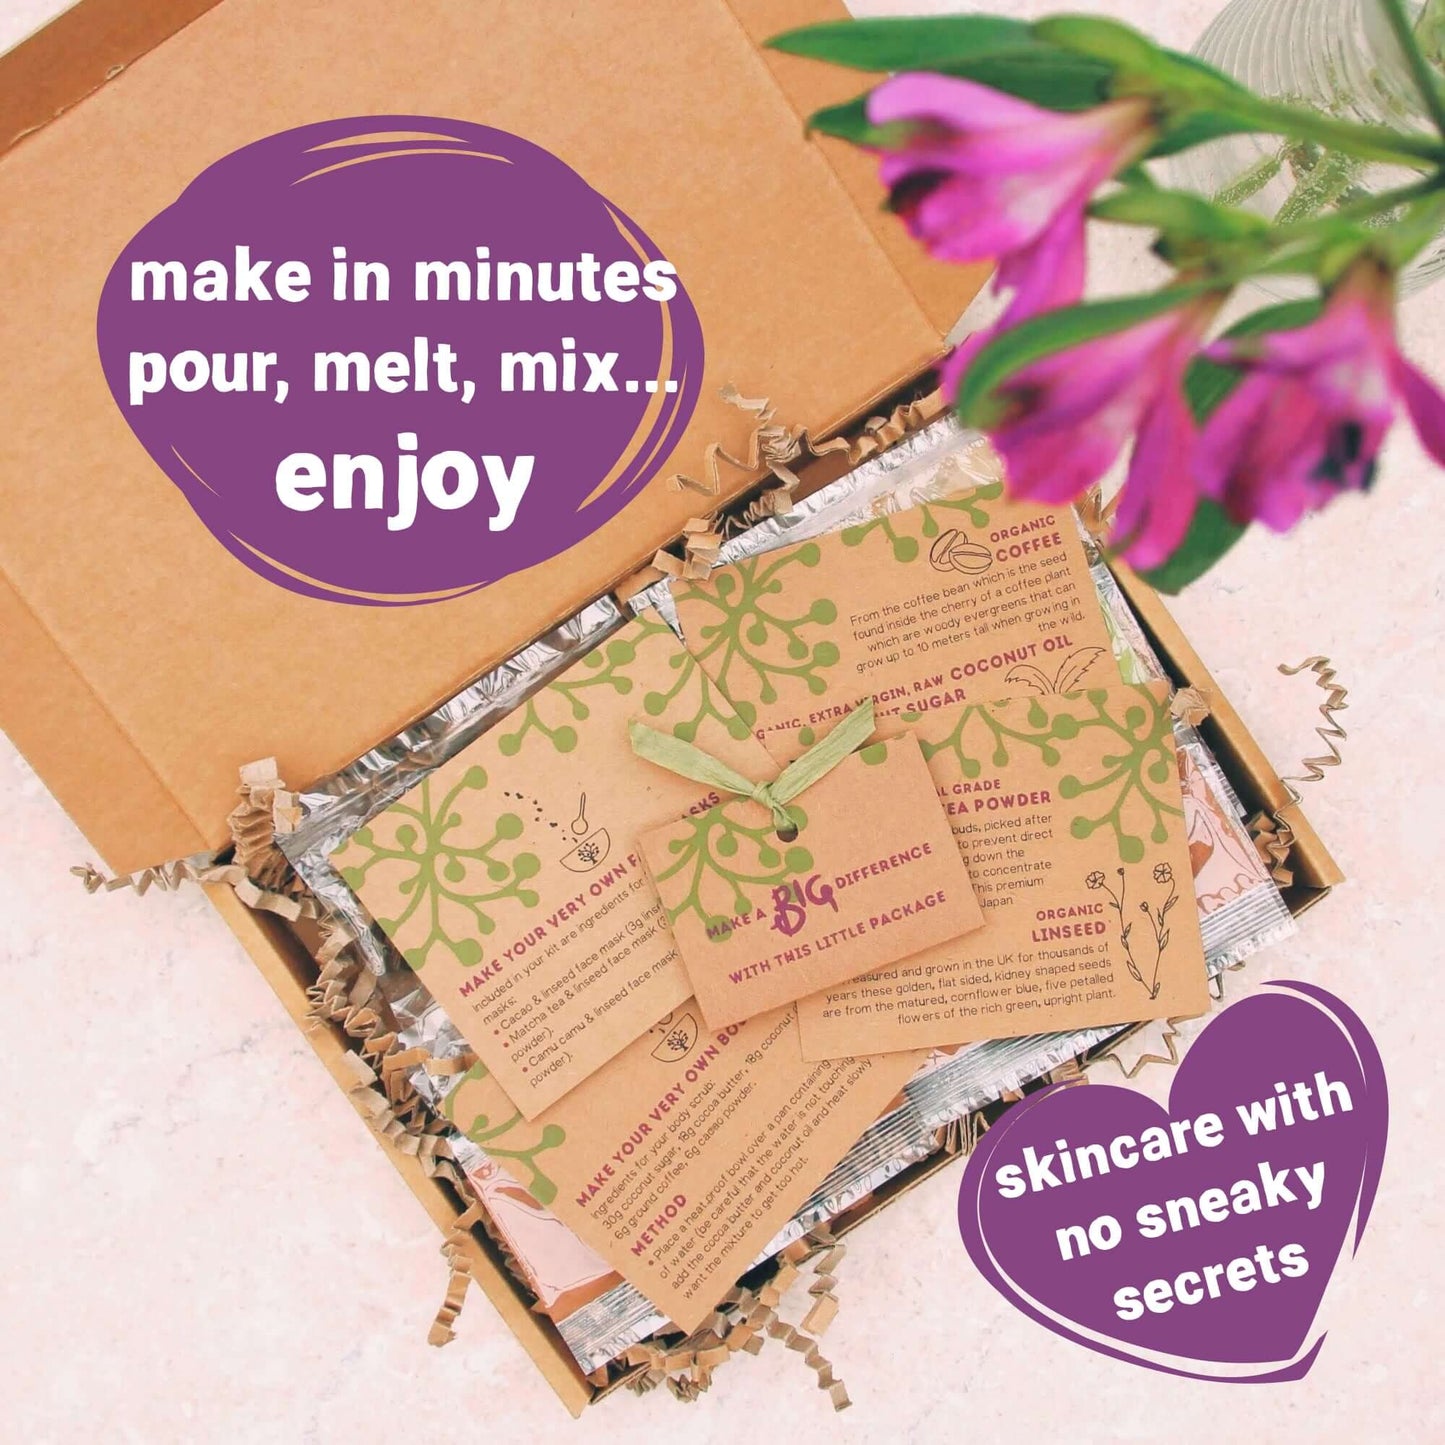 eco-friendly skincare kit inside 21st birthday letterbox gift